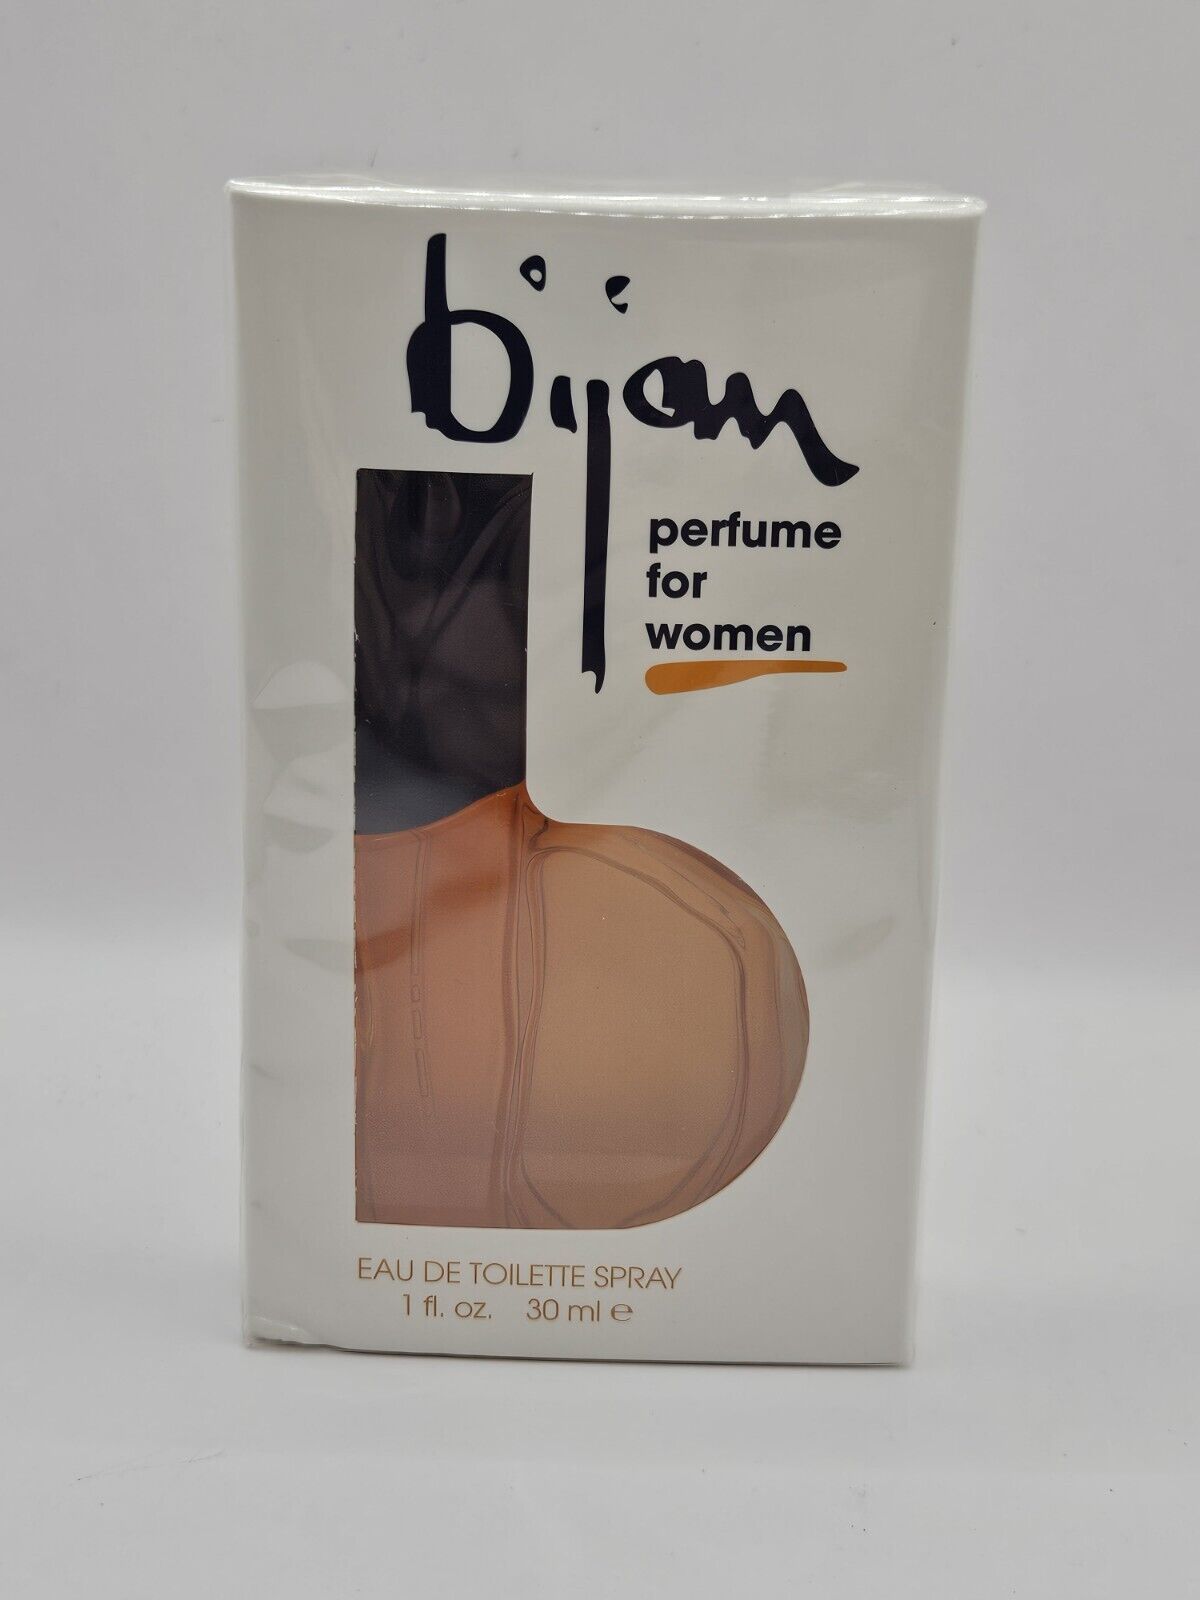 BIJAN for WOMEN Eau De Toilette Collectible Perfume Spray 1 Oz 30 ml New in Box